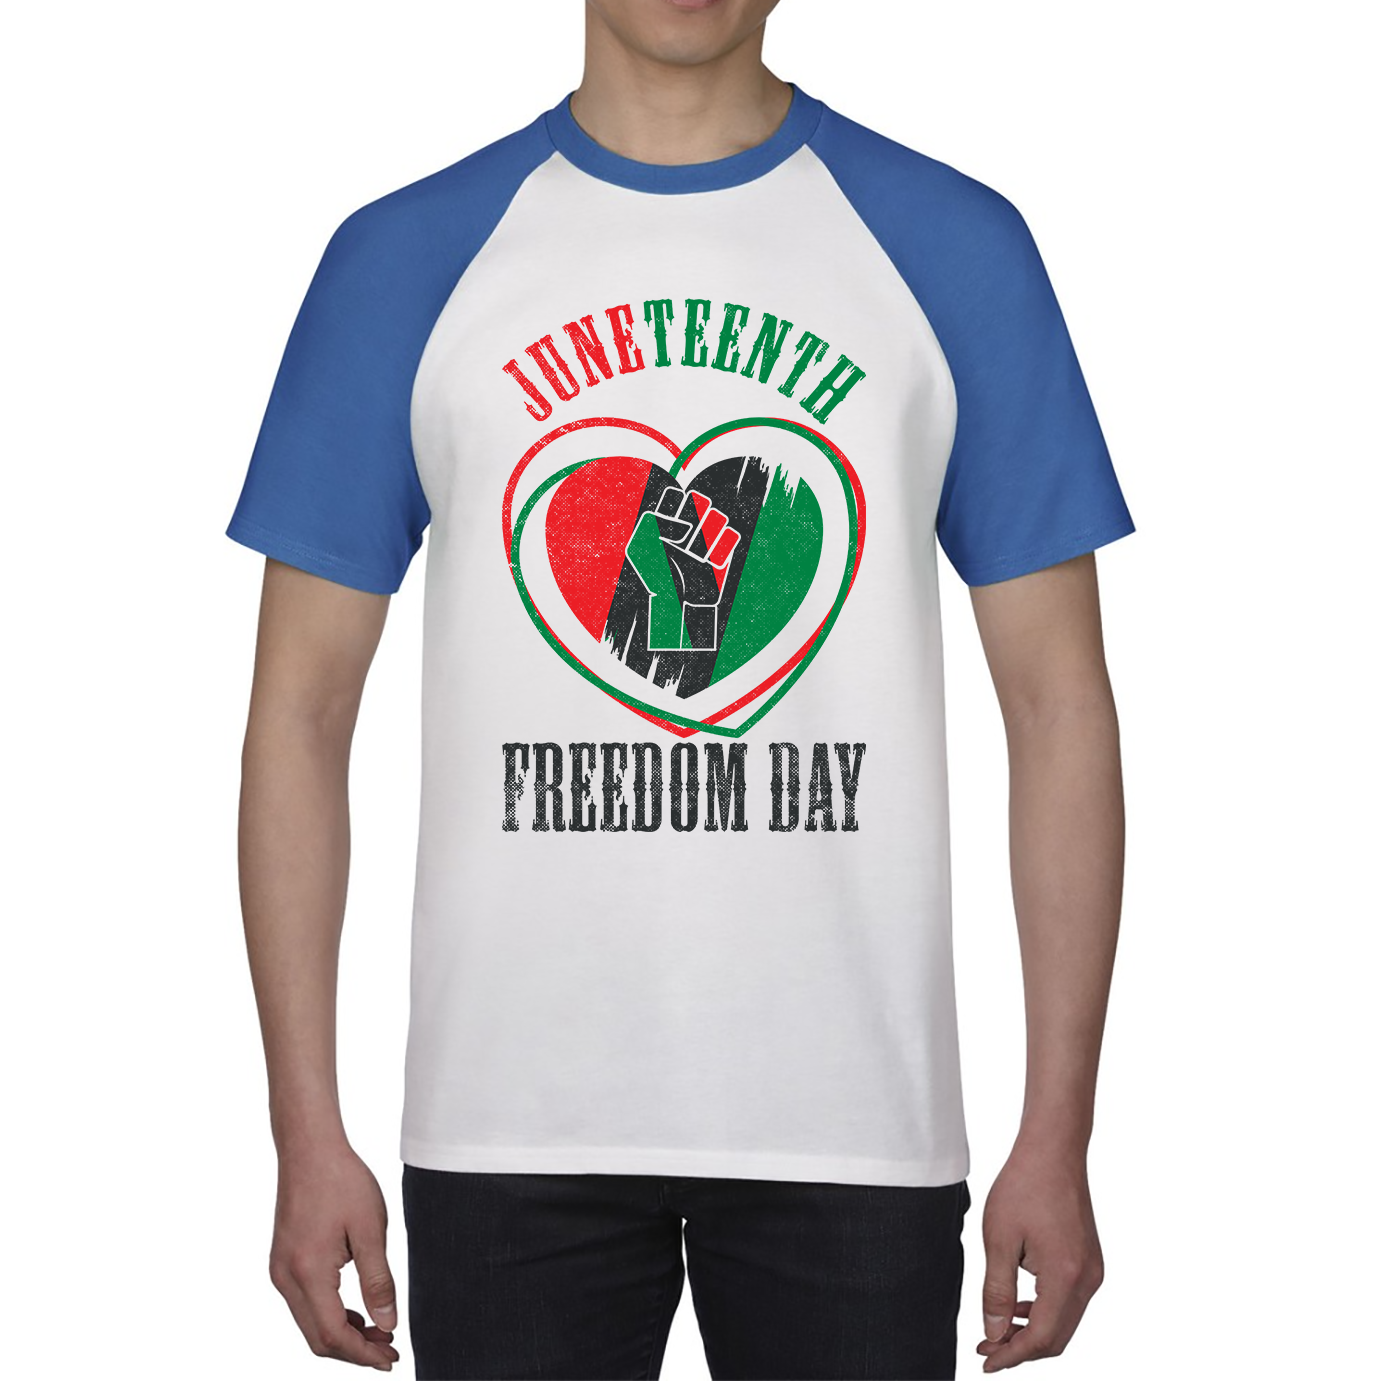 Juneteenth Black Day Freedom King William III British Royal Black History Freedom Baseball T Shirt